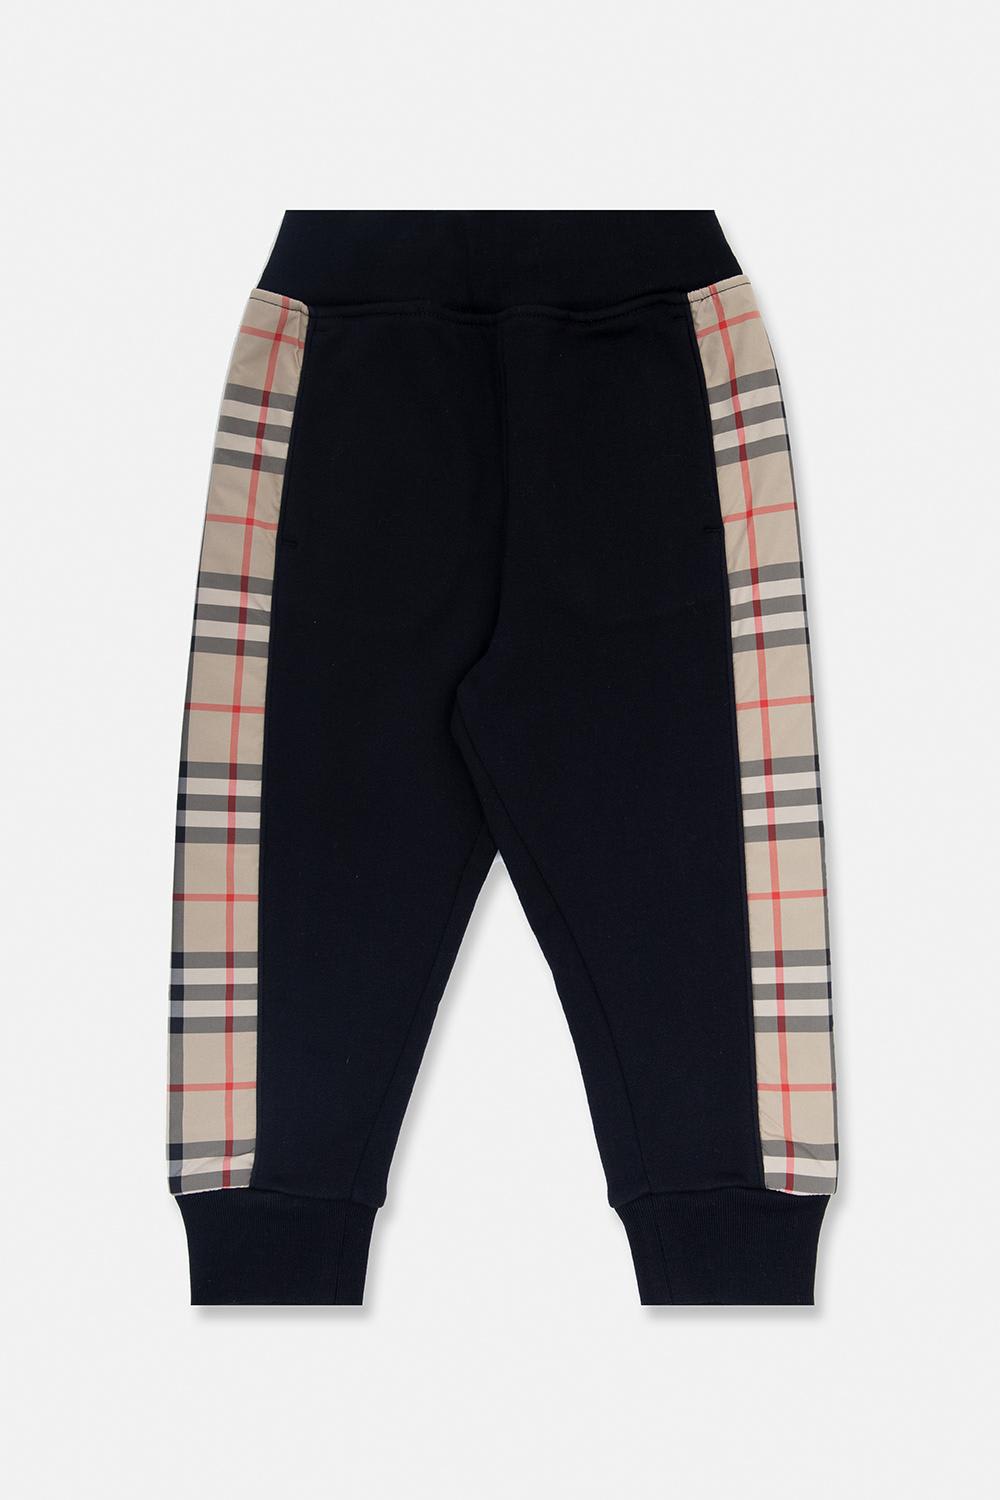 Burberry Kids' Nolen Patterned Sweatpants In Black